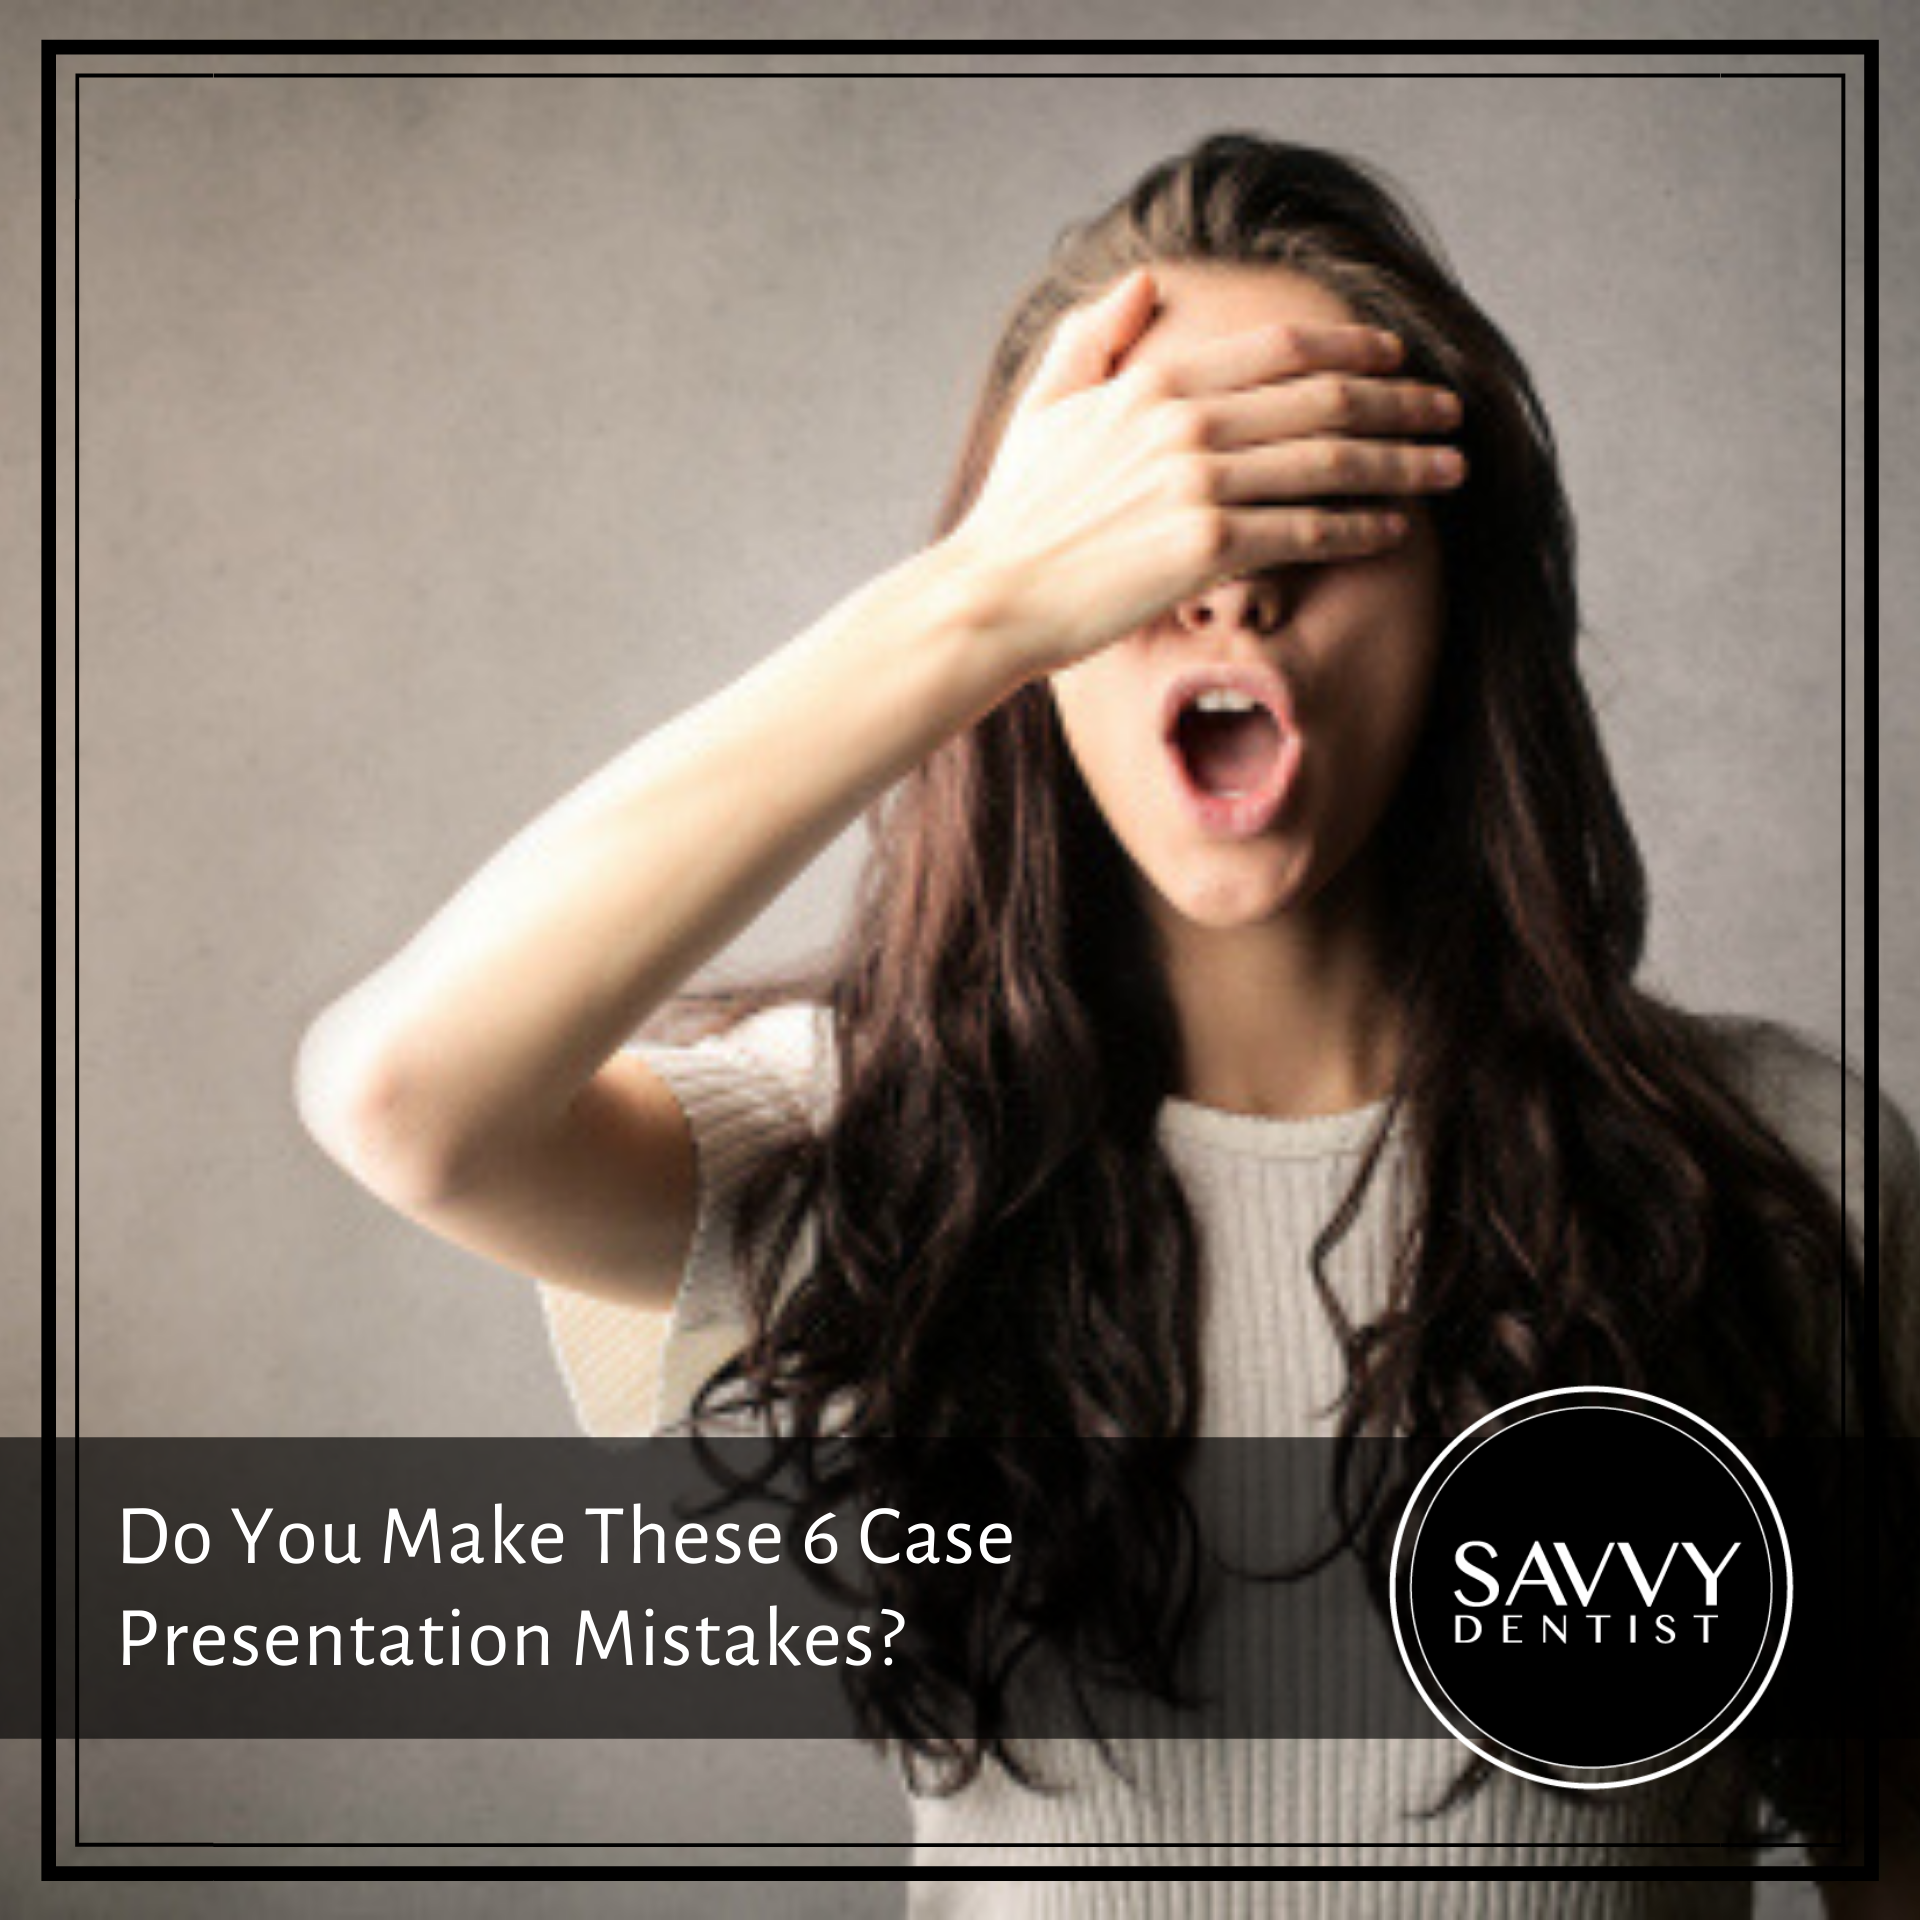 Do You Make These 6 Case Presentation Mistakes?